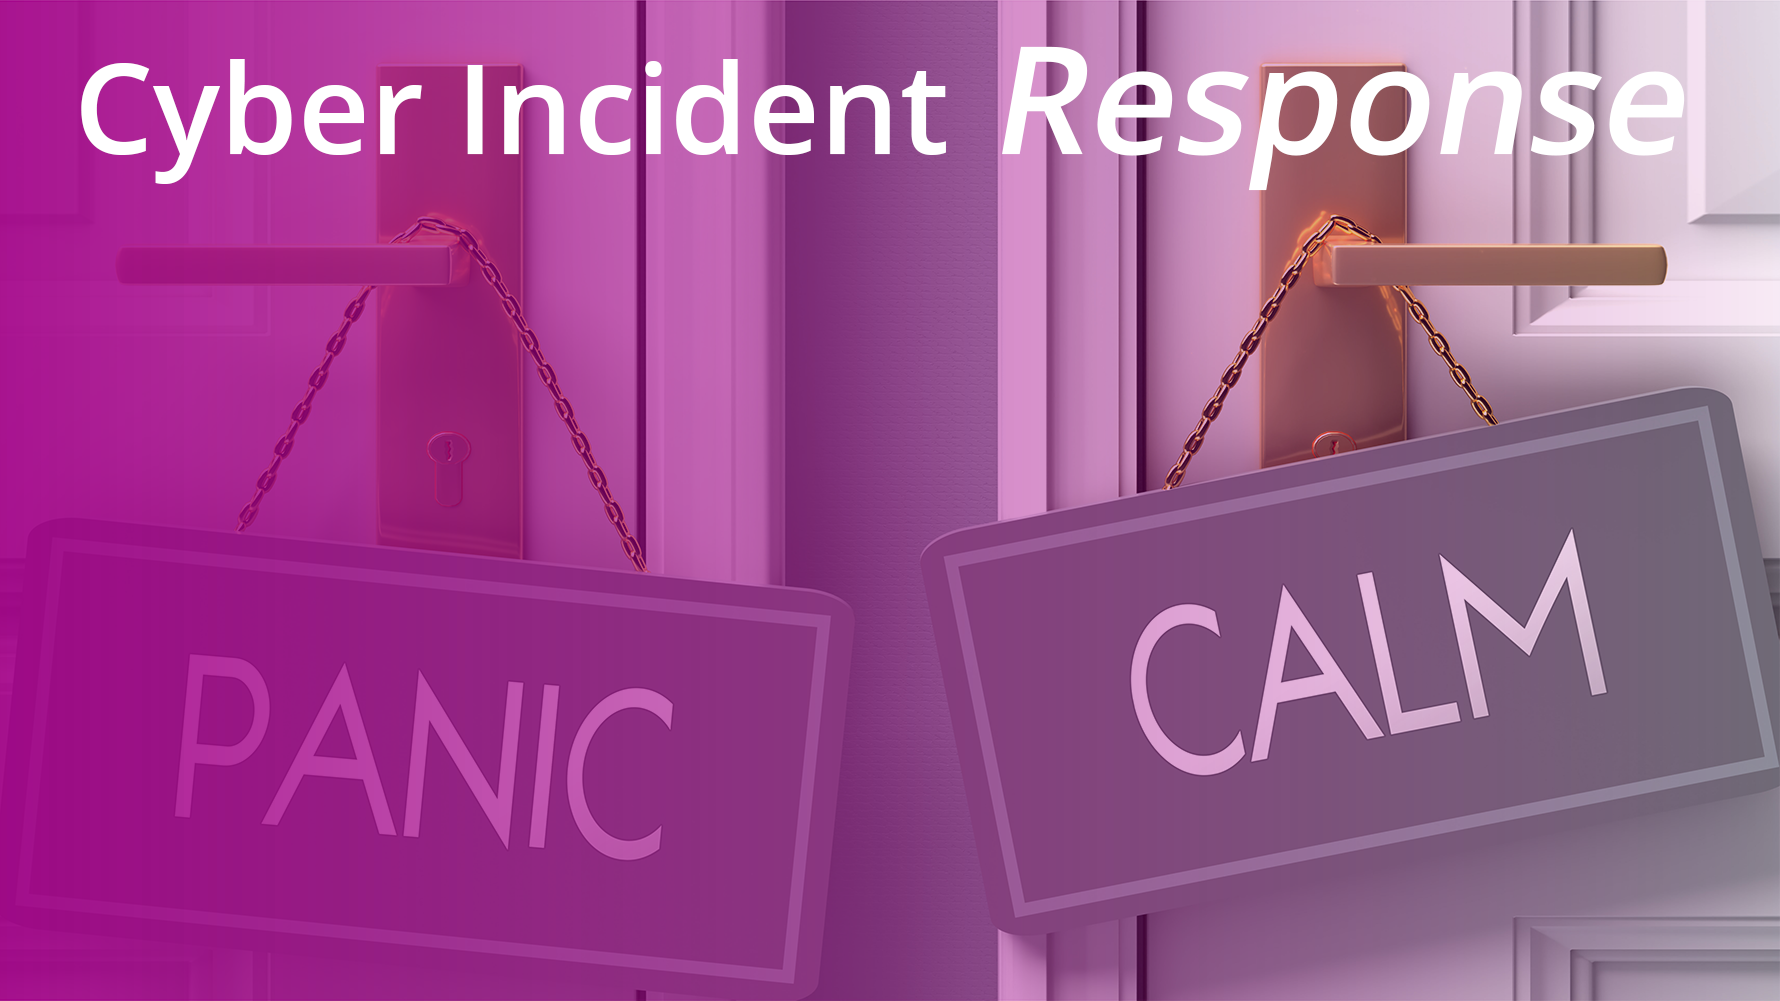 Cyber Incident Response Plan